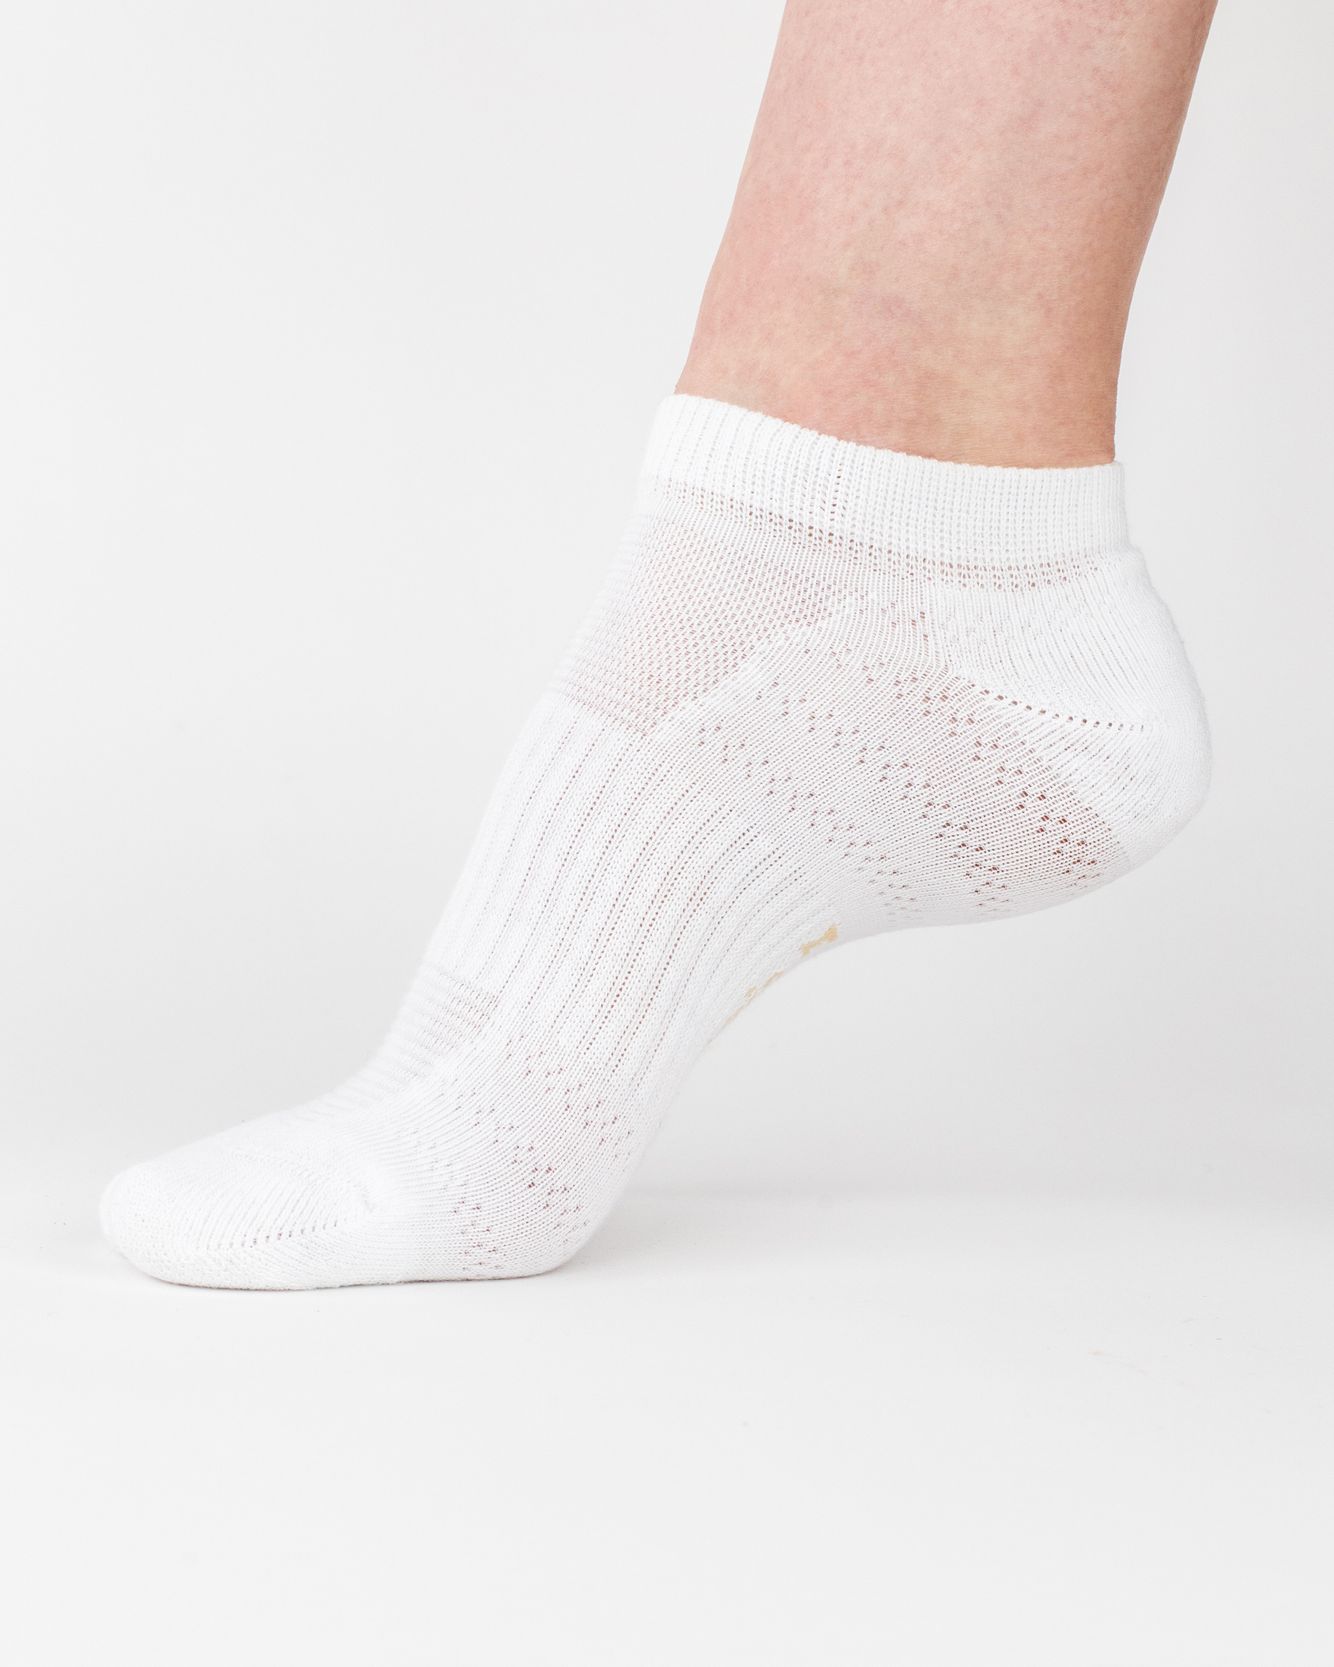 Vilgain Workout Organic Ankle Socks